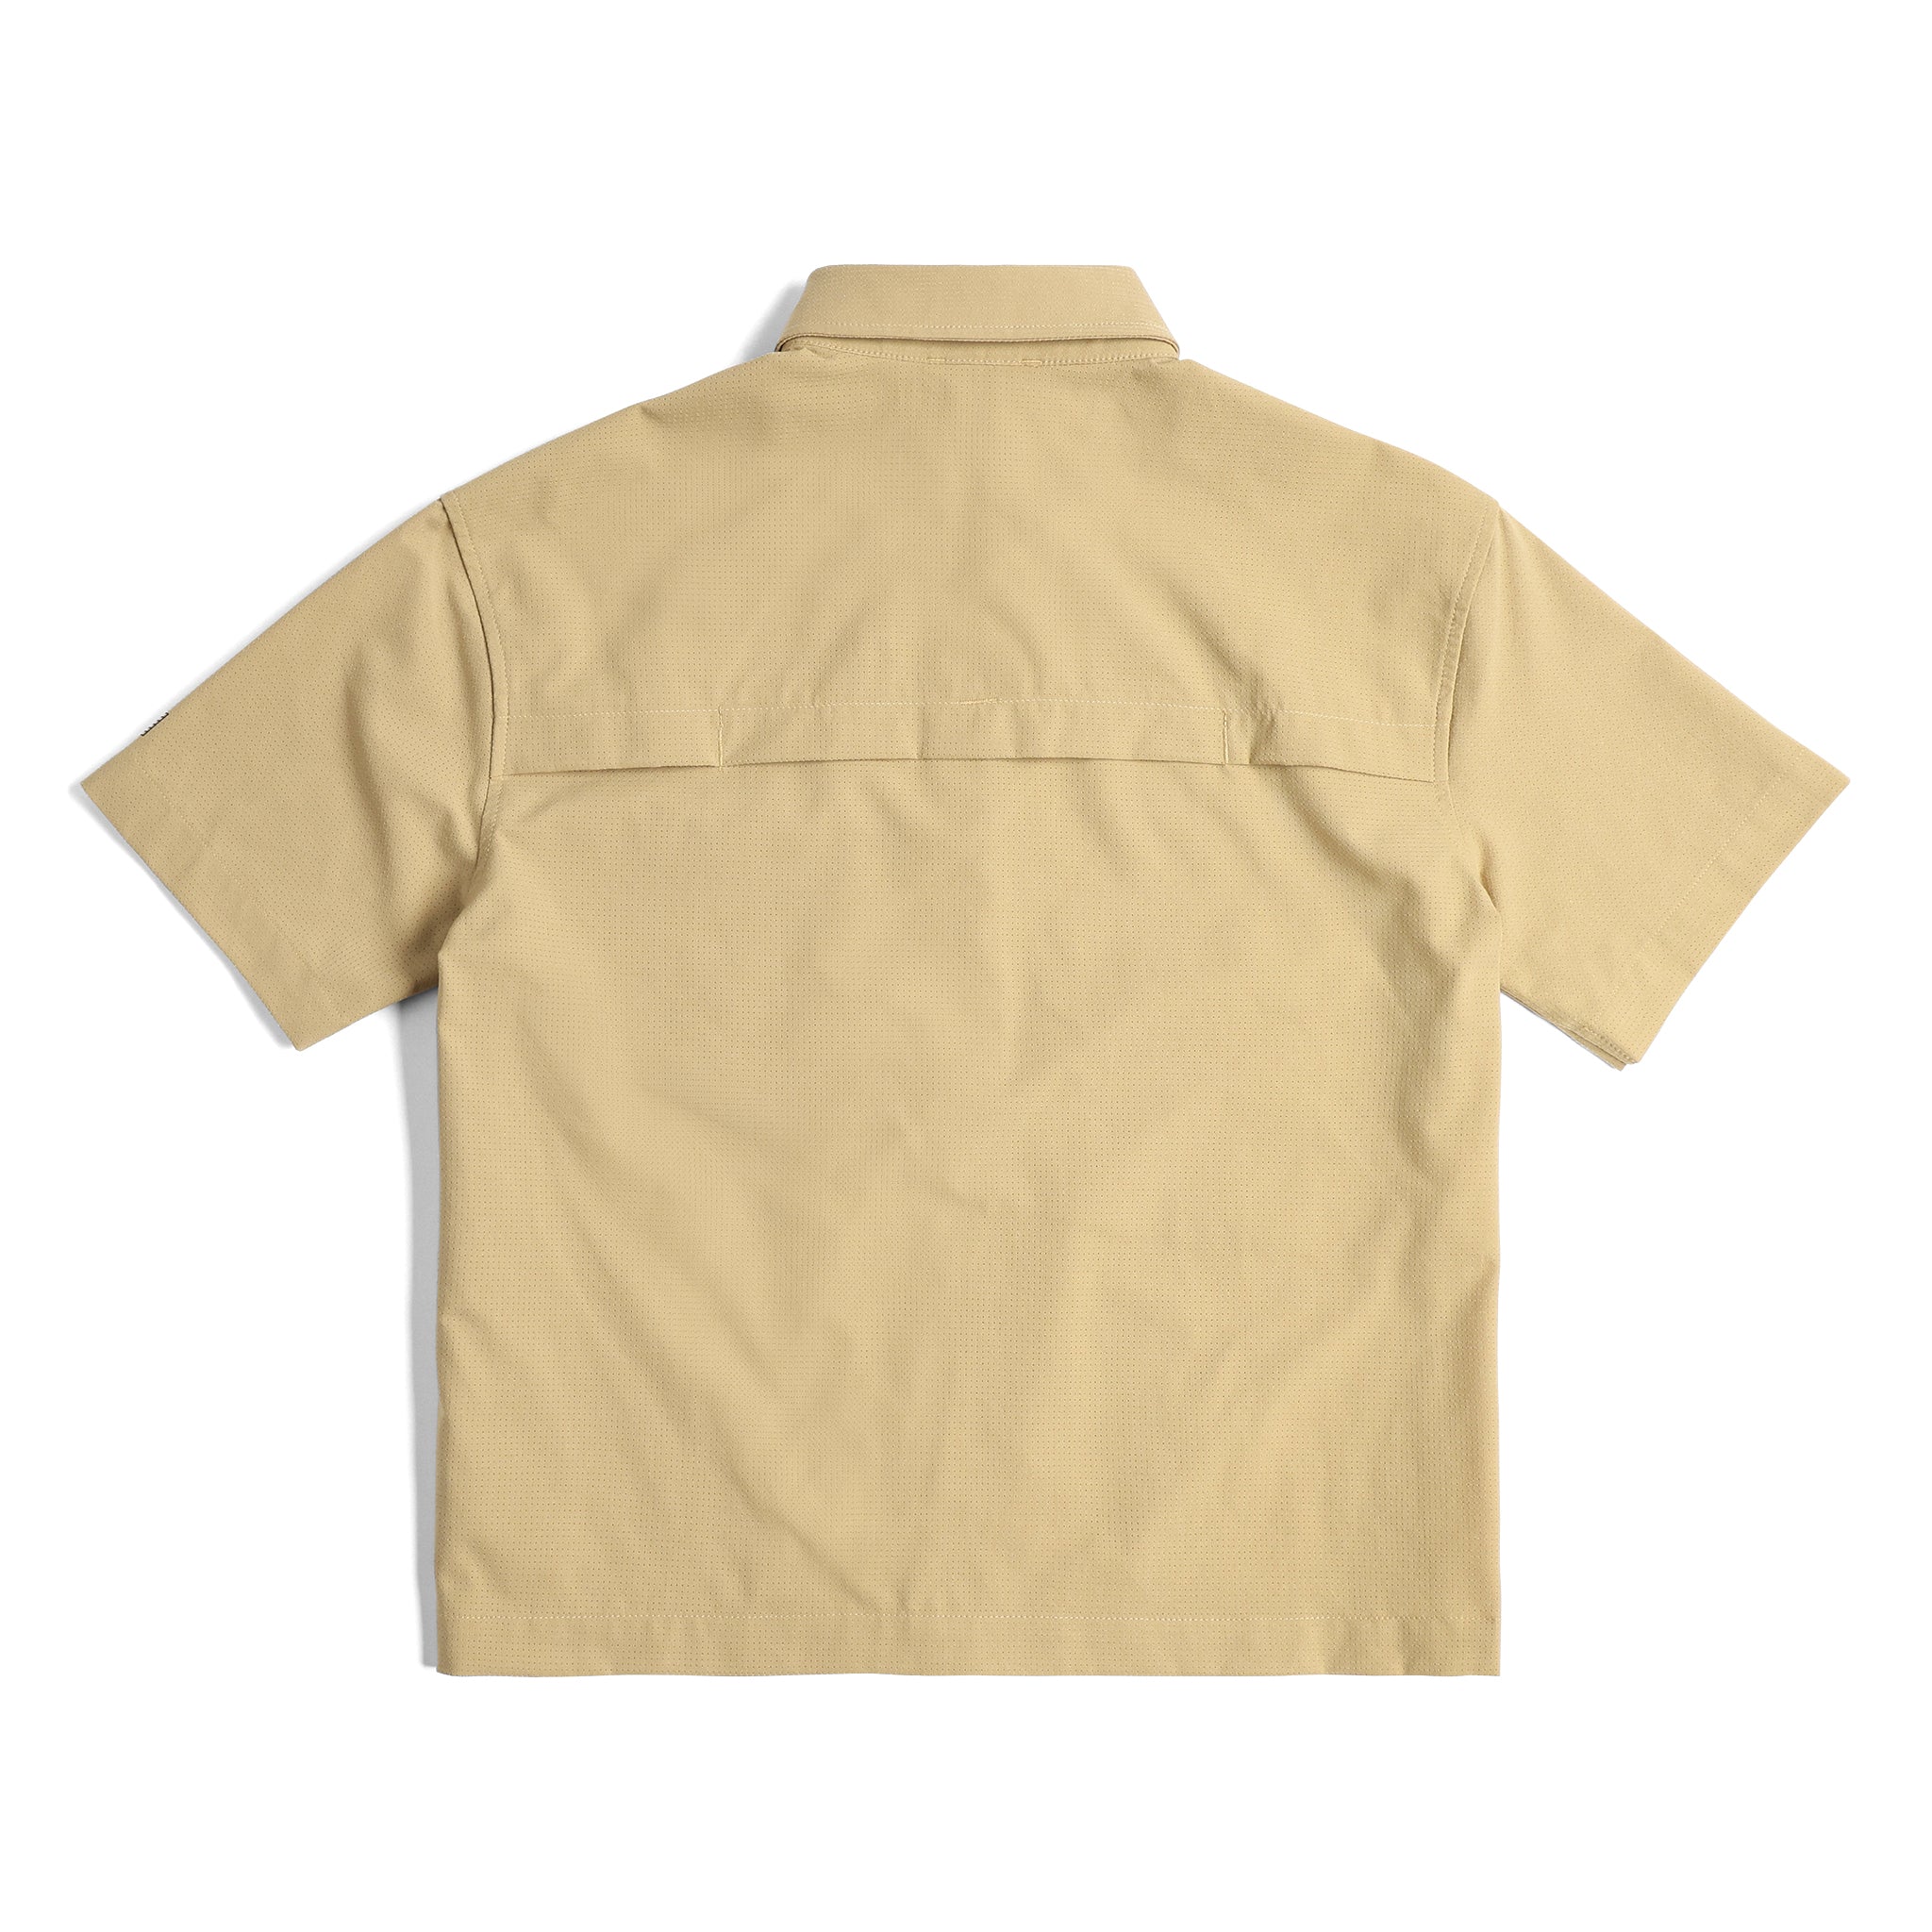 Back View of Topo Designs Retro River Shirt Ss - Women's in "Sahara"